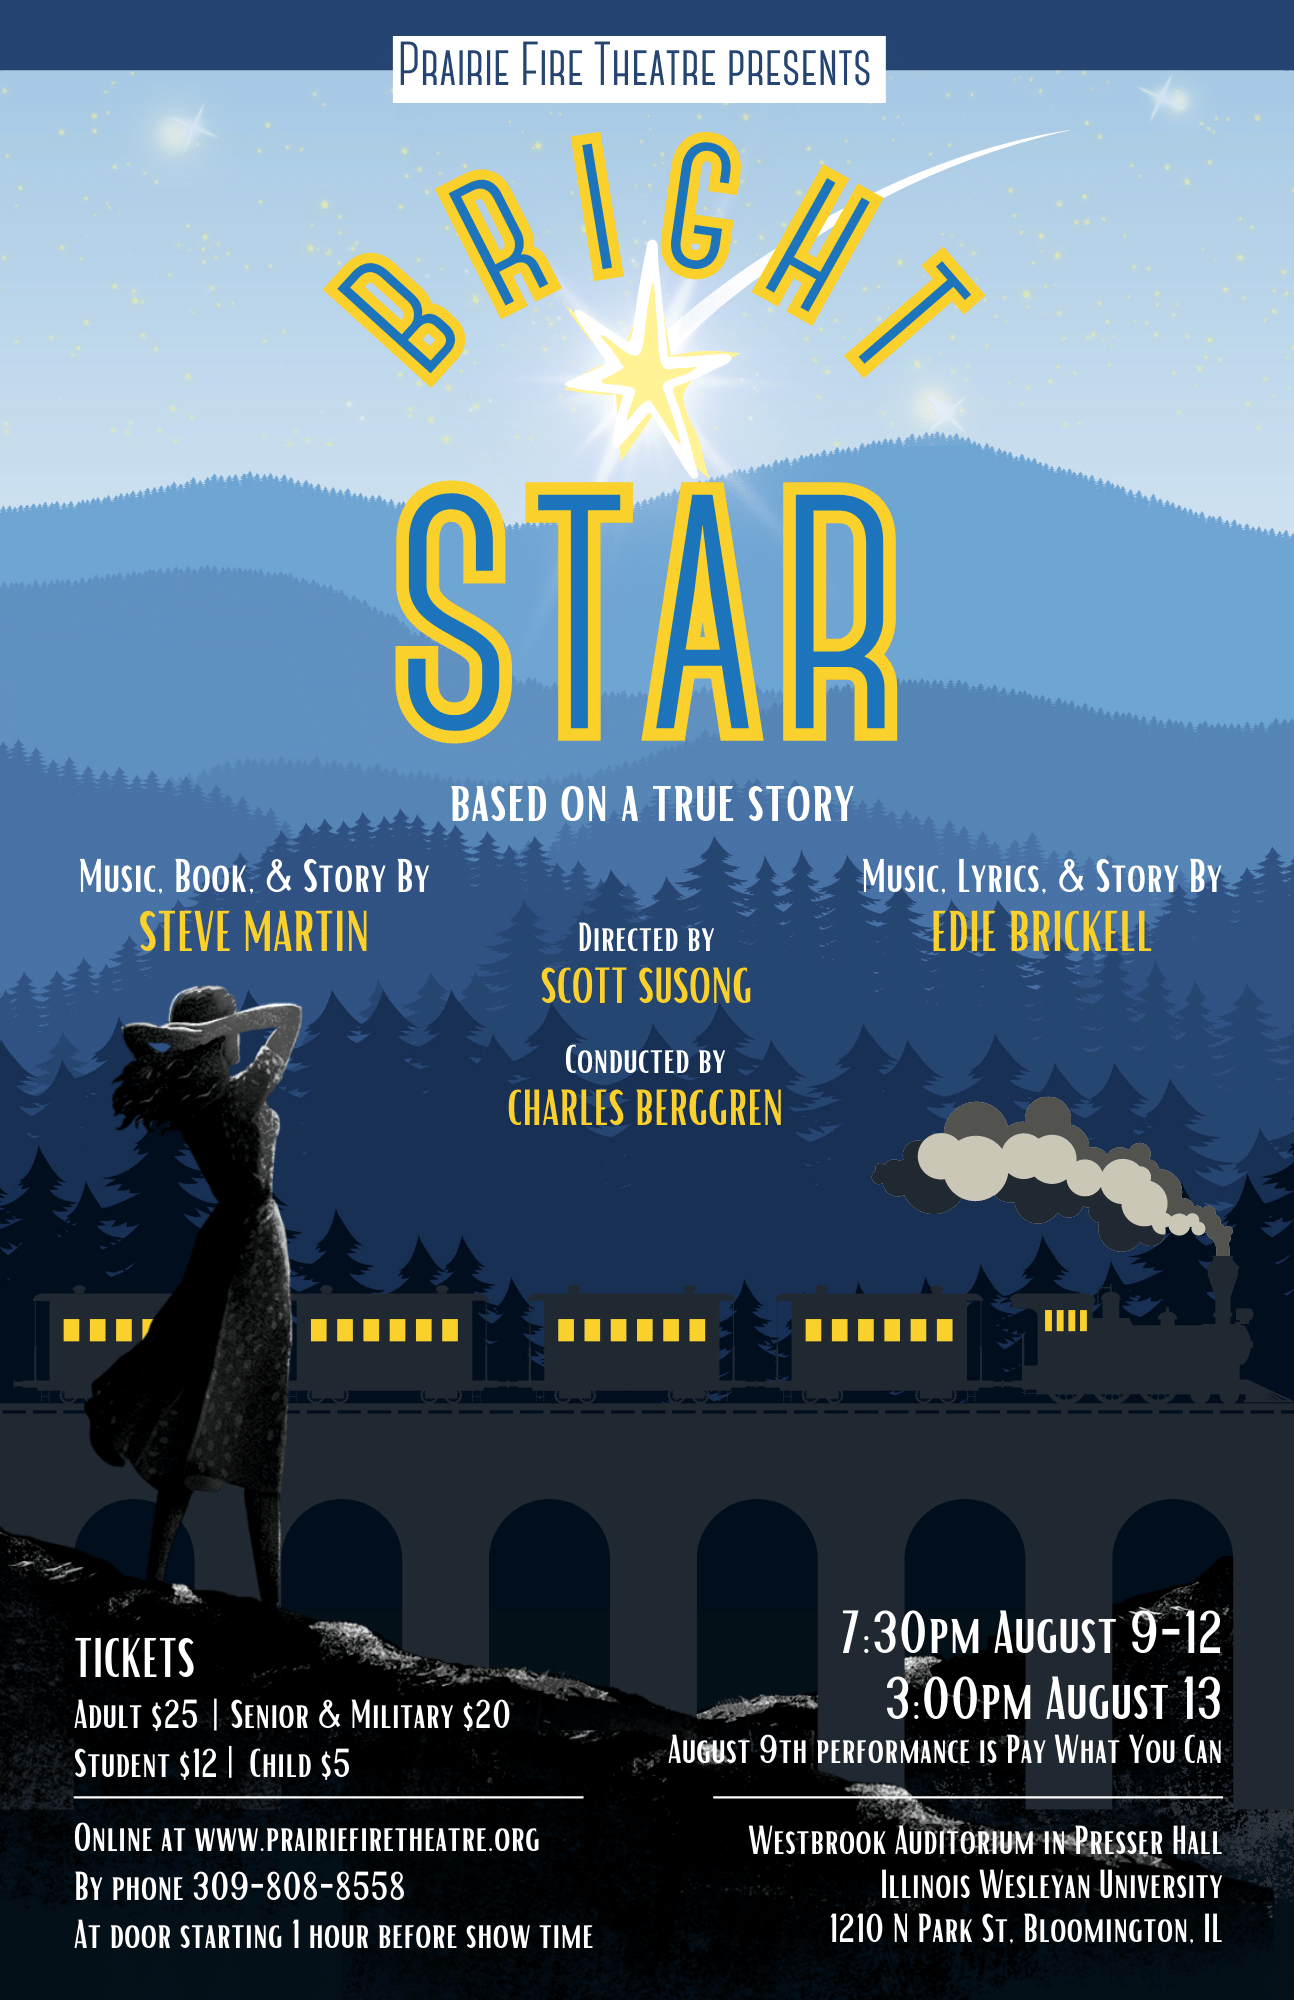 Prairie Fire Theatre presents "Bright Star"